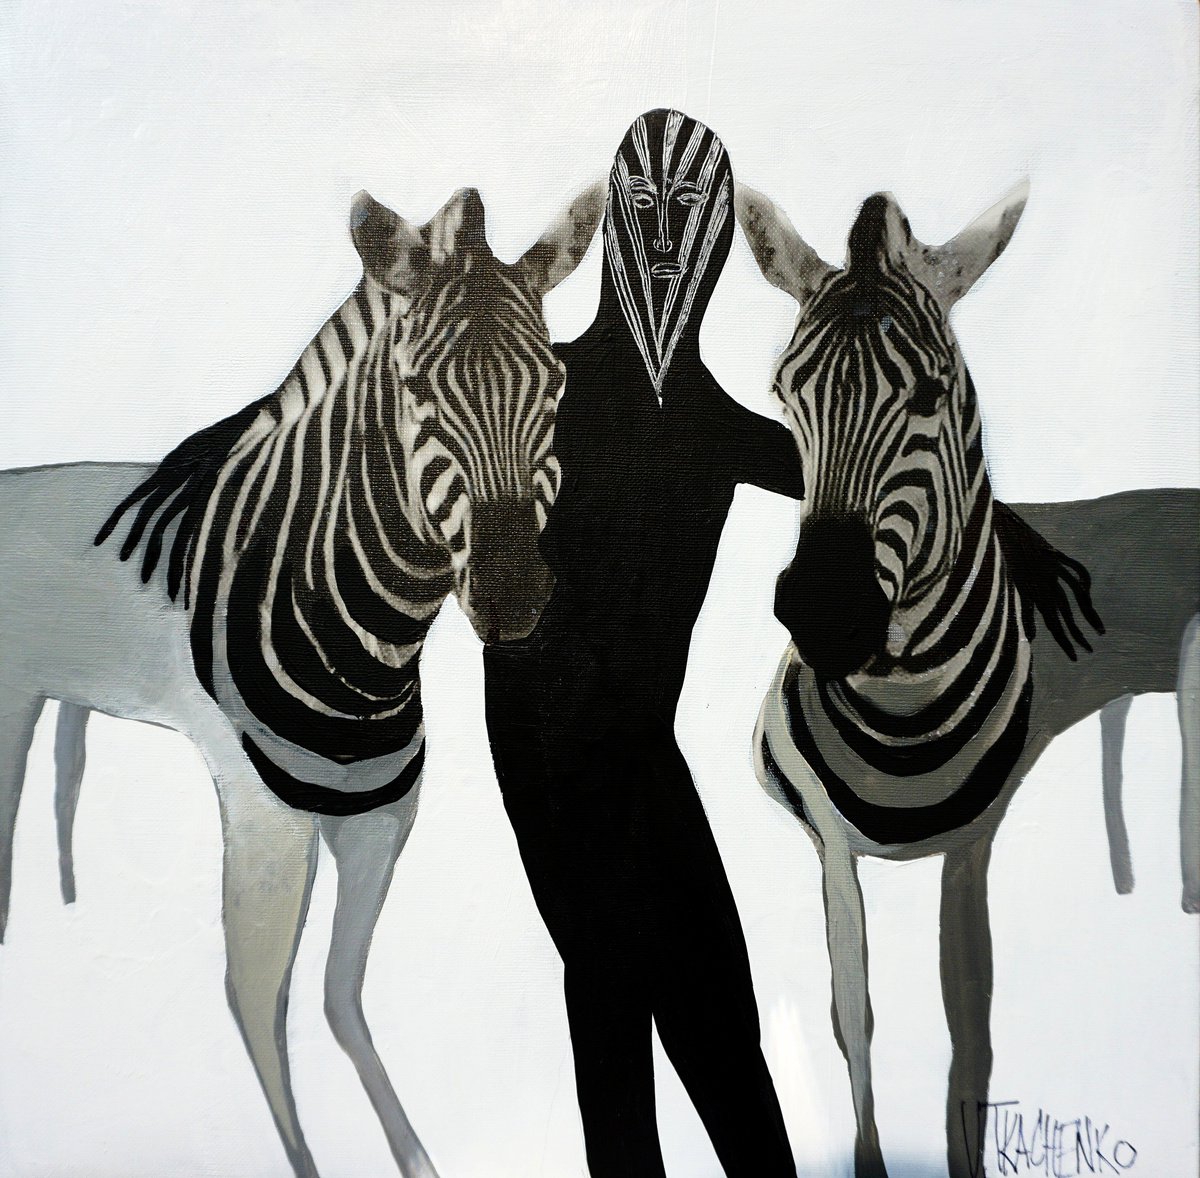 Three Amigos by Victor Tkachenko